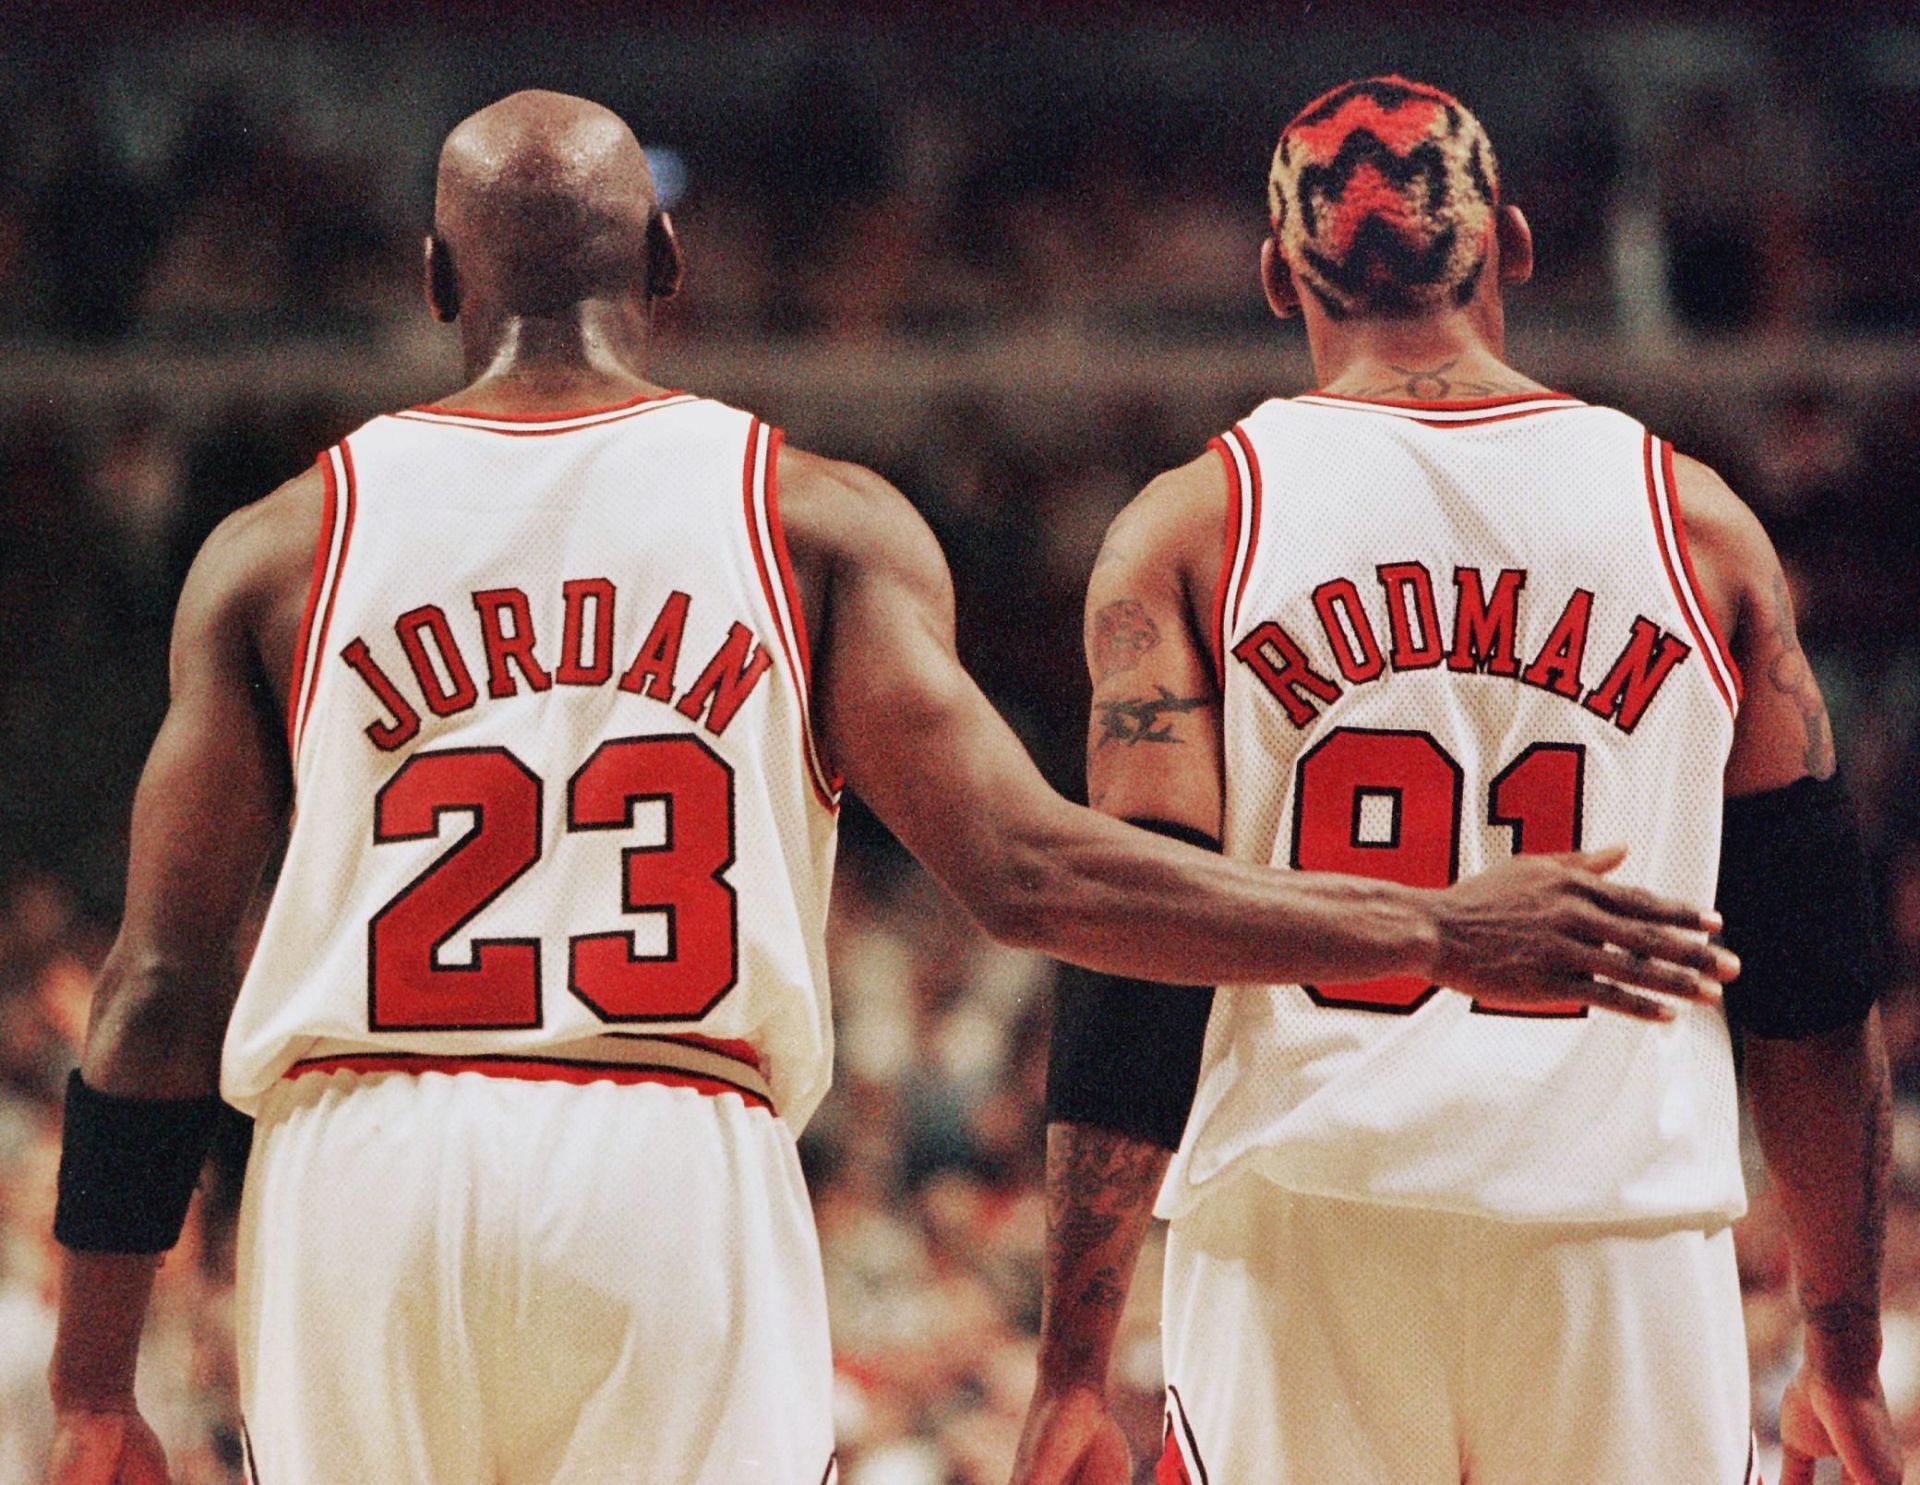 Jordan, Pippen, and Rodman reaction to winning 70 regular-season games -  Basketball Network - Your daily dose of basketball